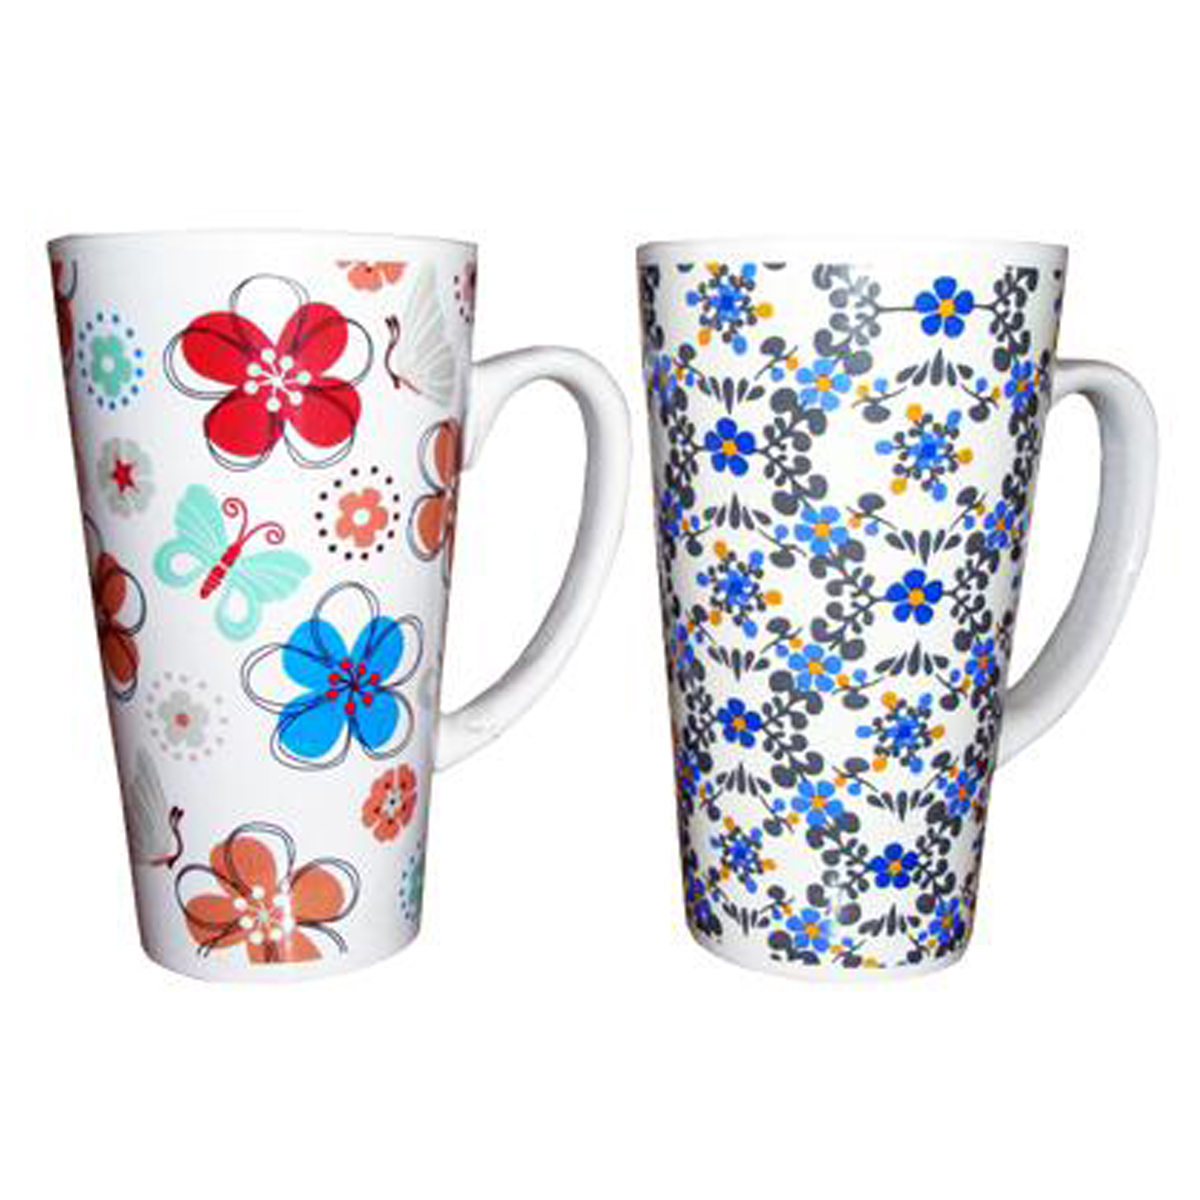 Funnel shaped ceramic mug